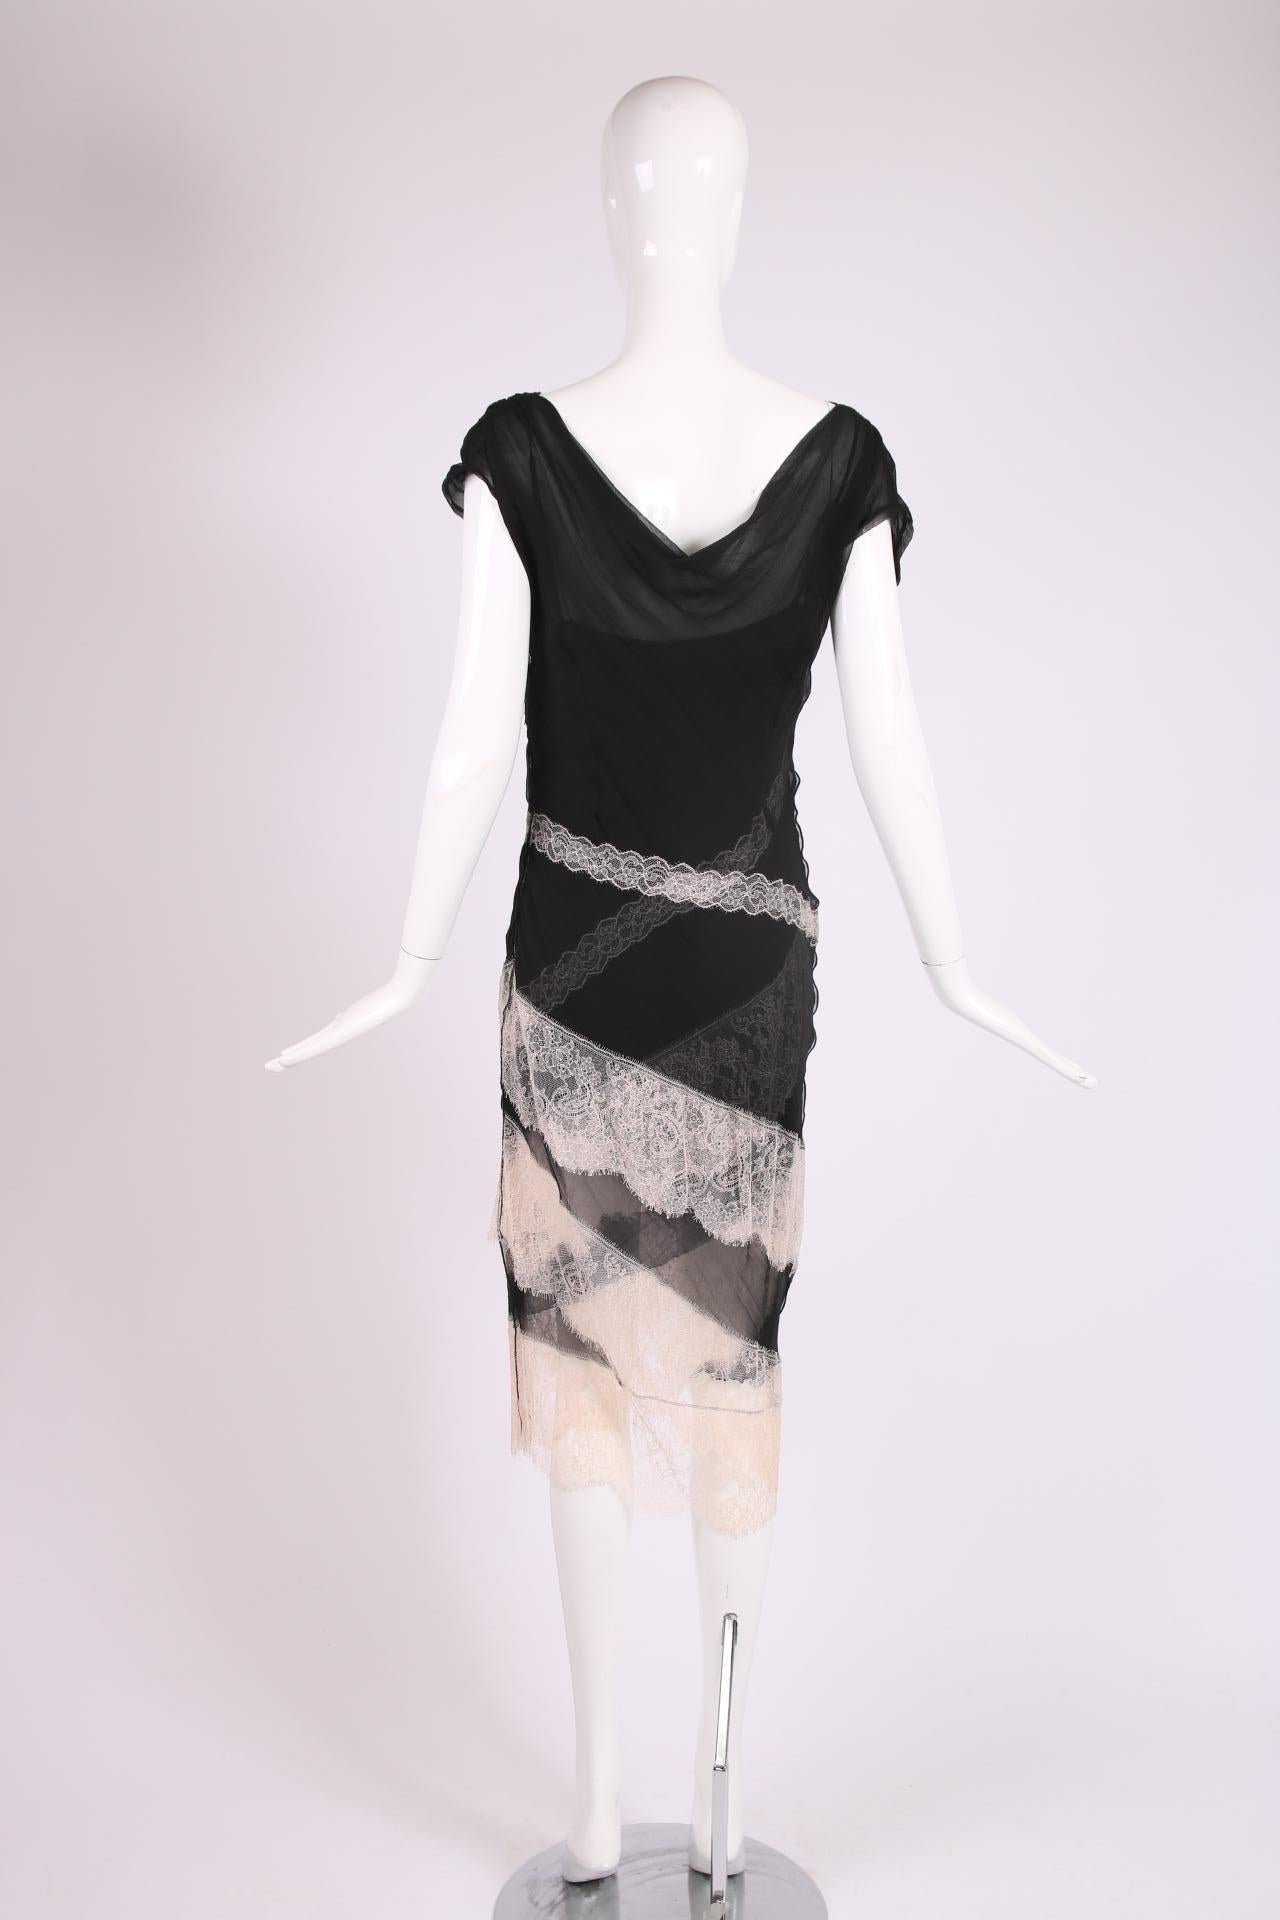 Women's Nina Ricci Black Chiffon & Lace Bias Cut Cocktail Dress